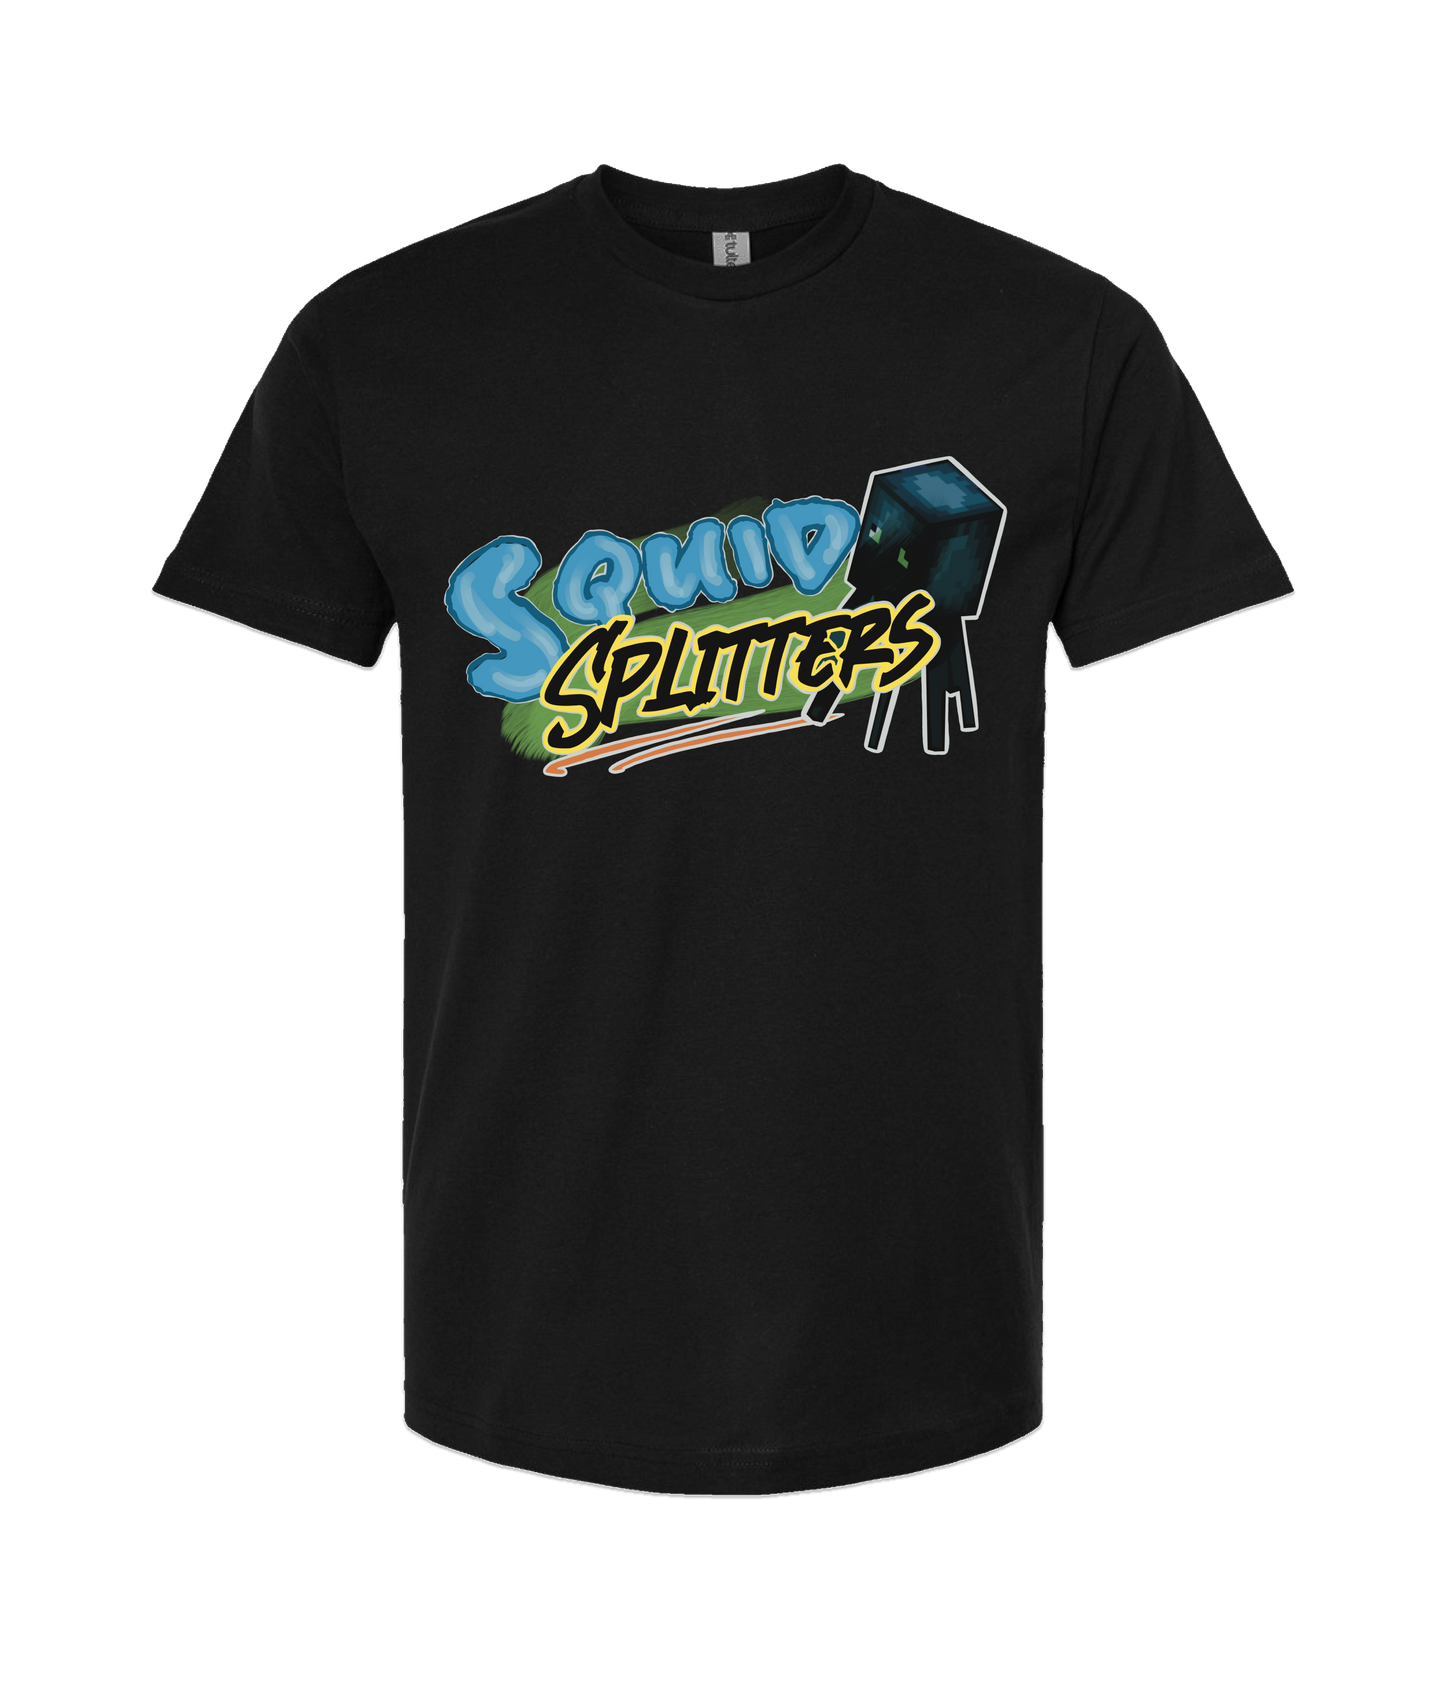 Squid Splitters - DESIGN 1 - Black T-Shirt